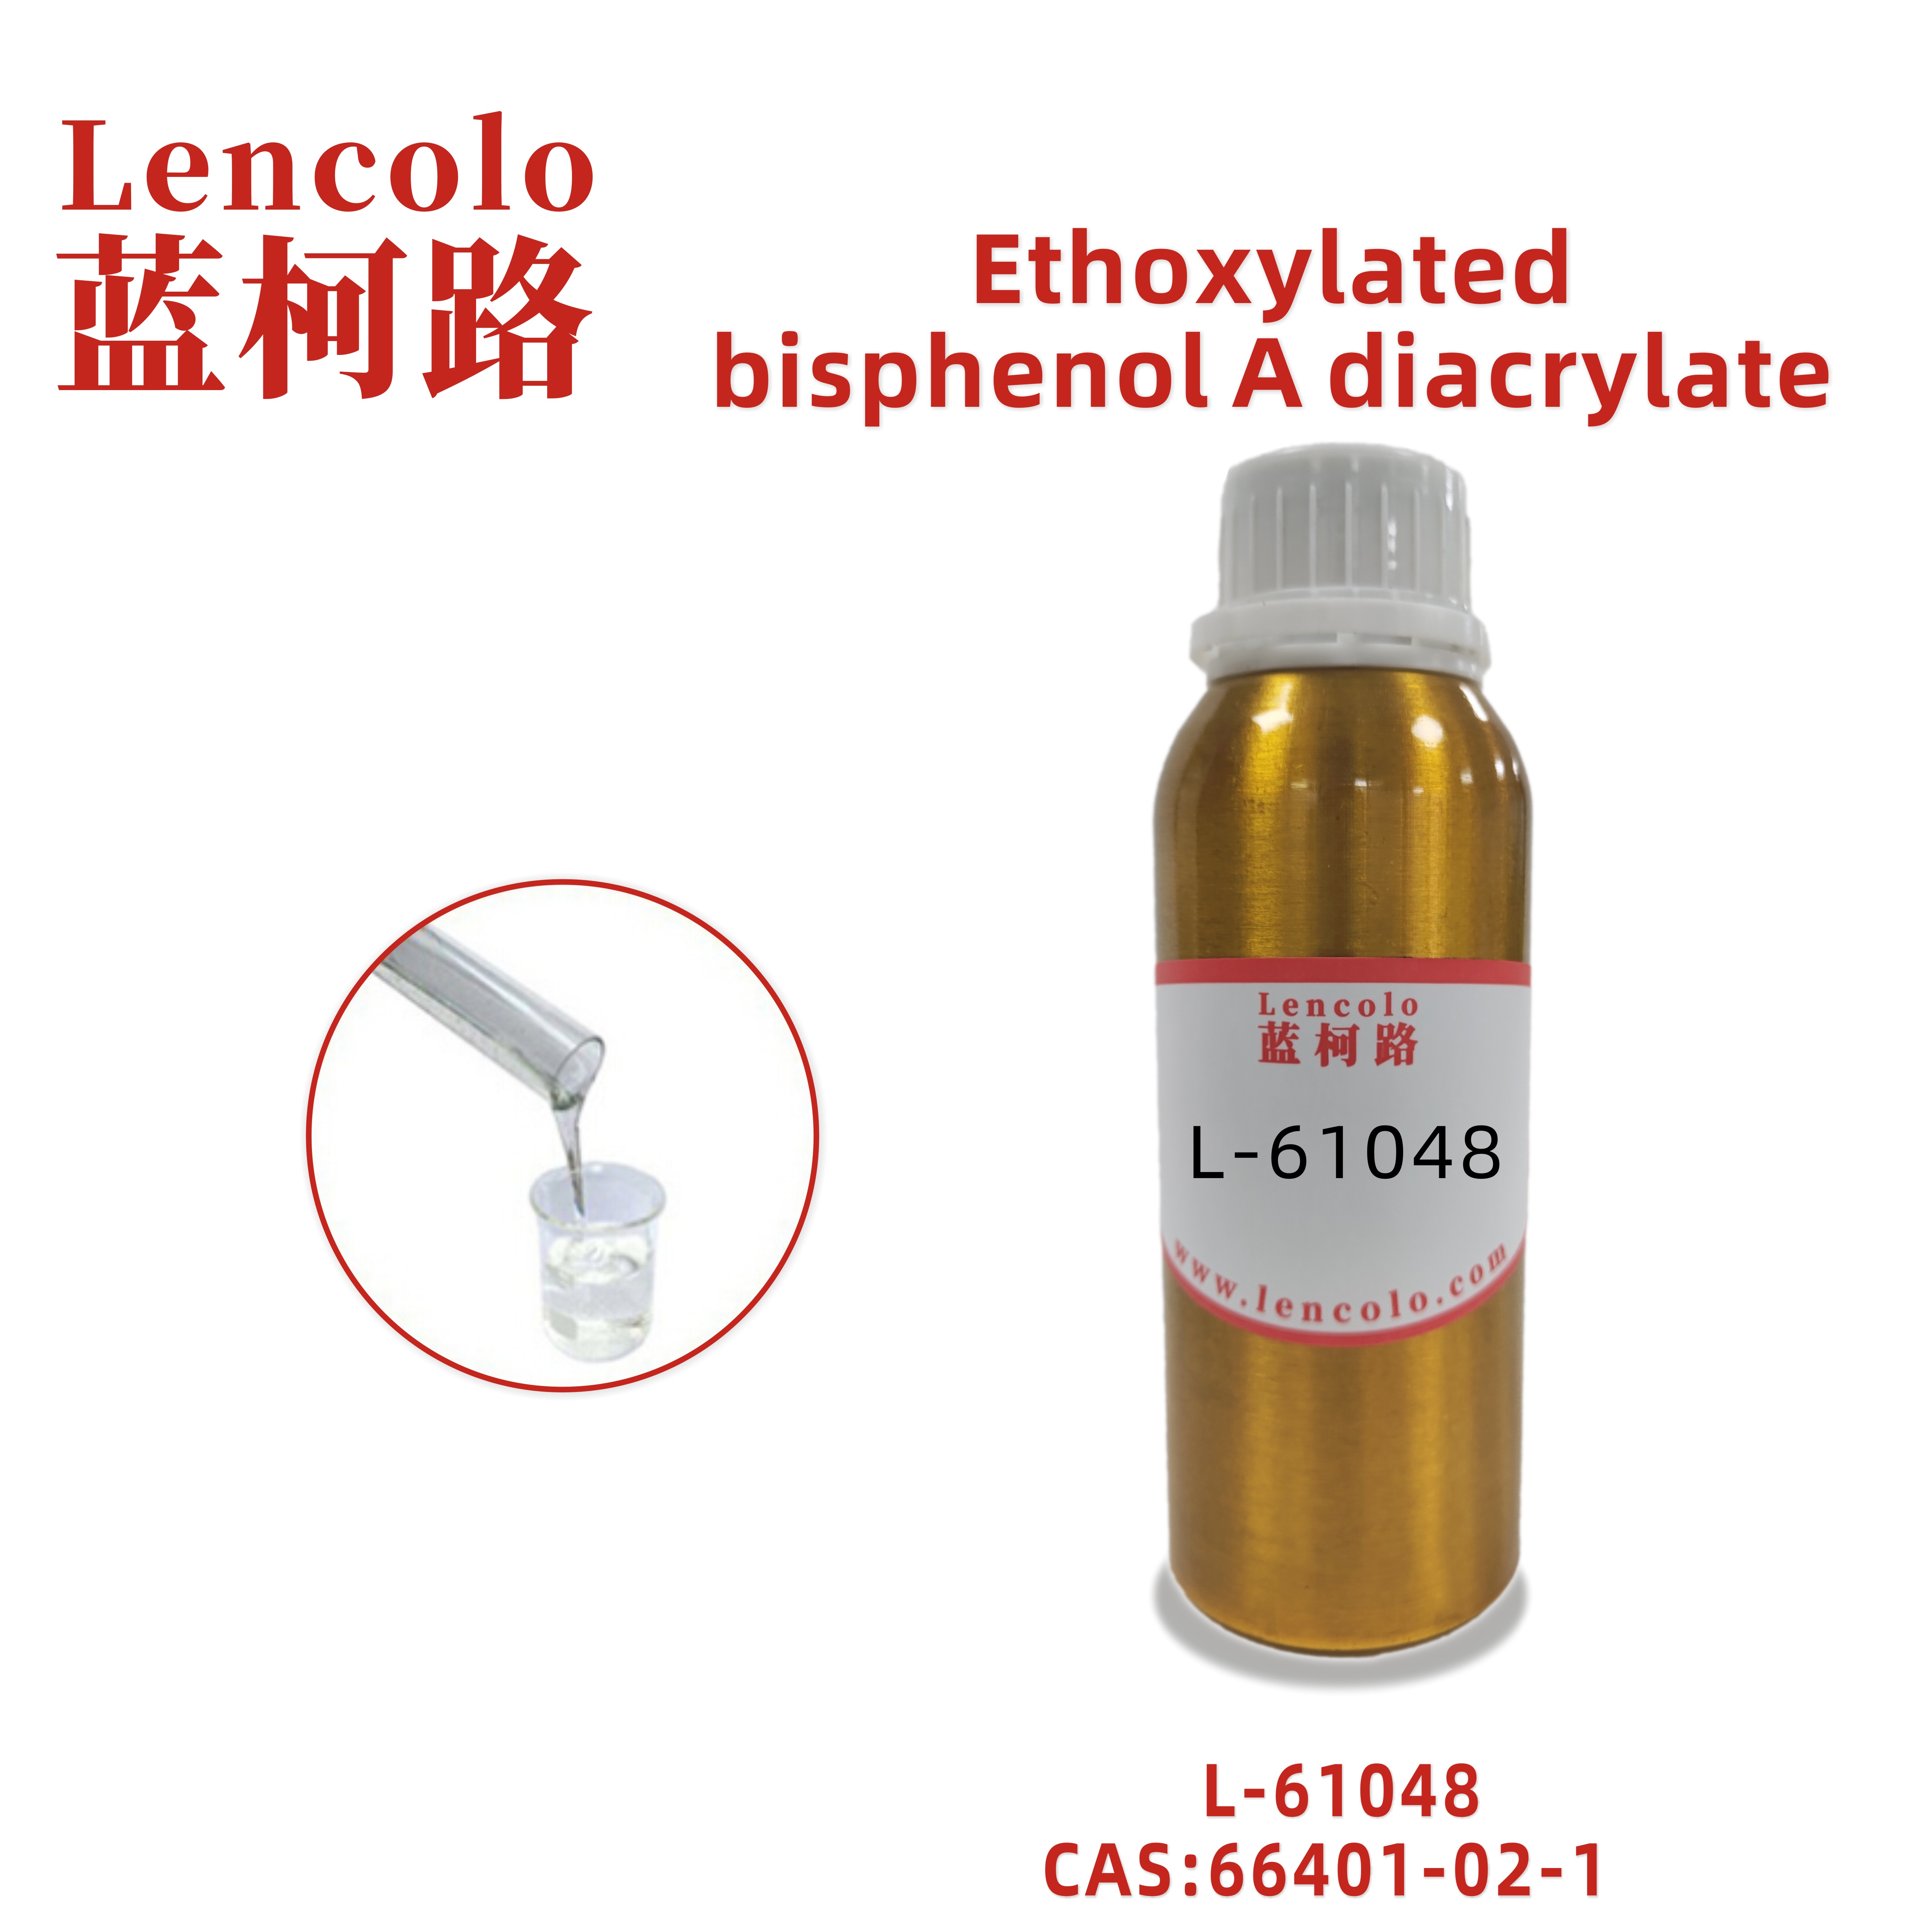 L-61048 (BPA10EODA) Ethoxylated bisphenol A diacrylate